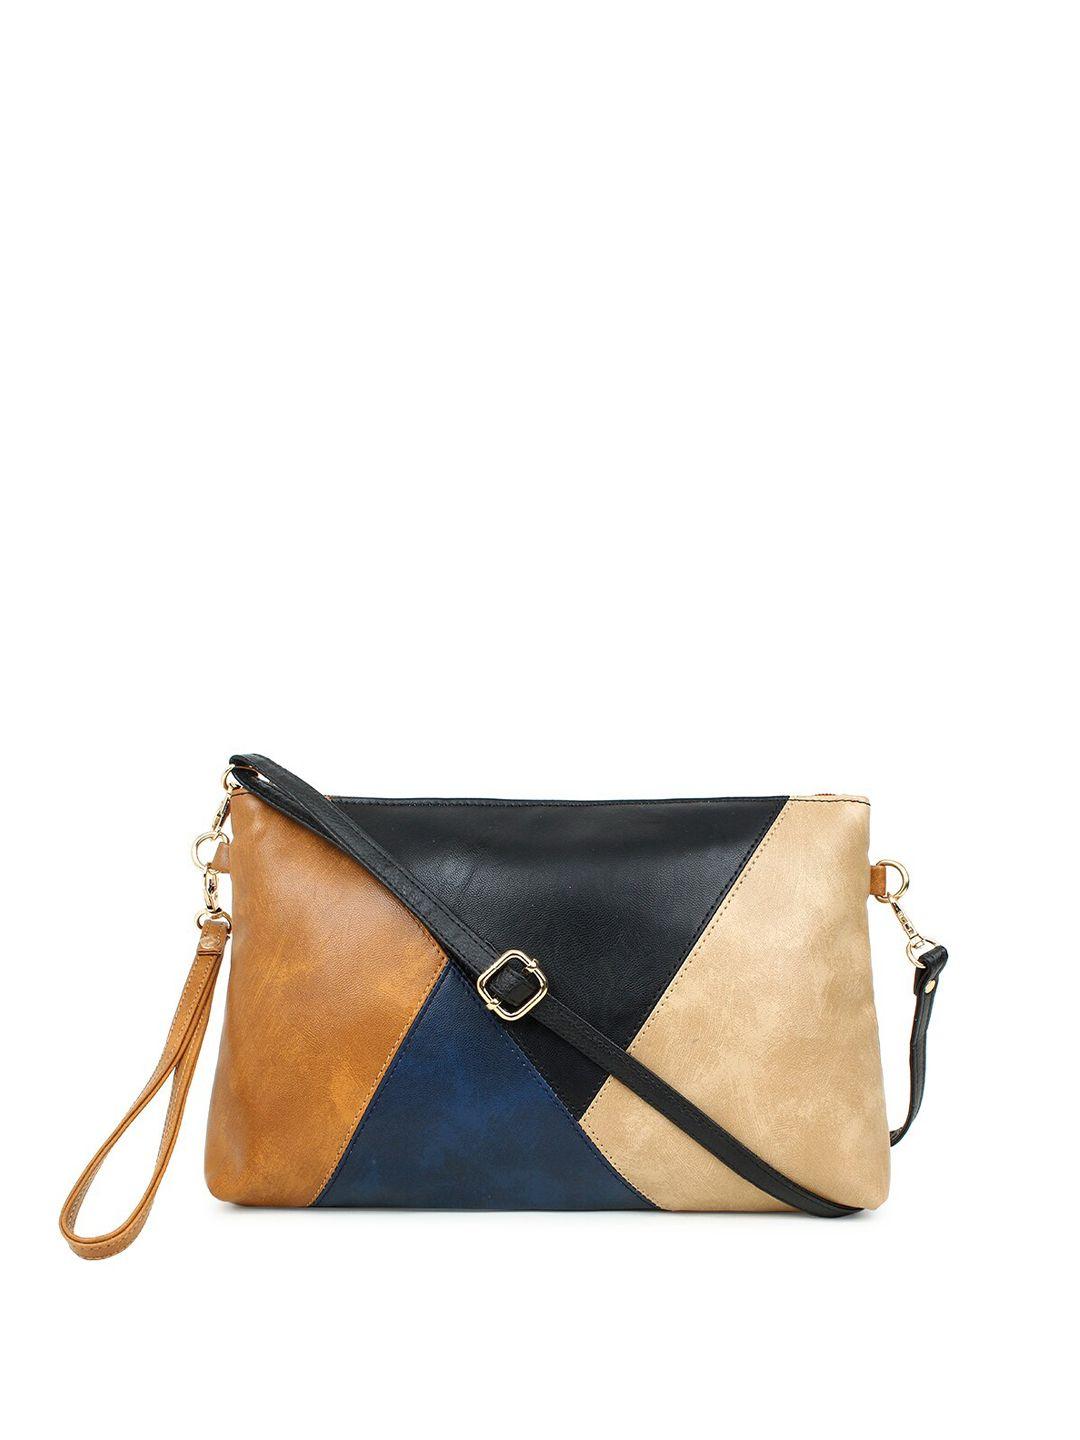 spice art beige & navy blue colourblocked purse clutch